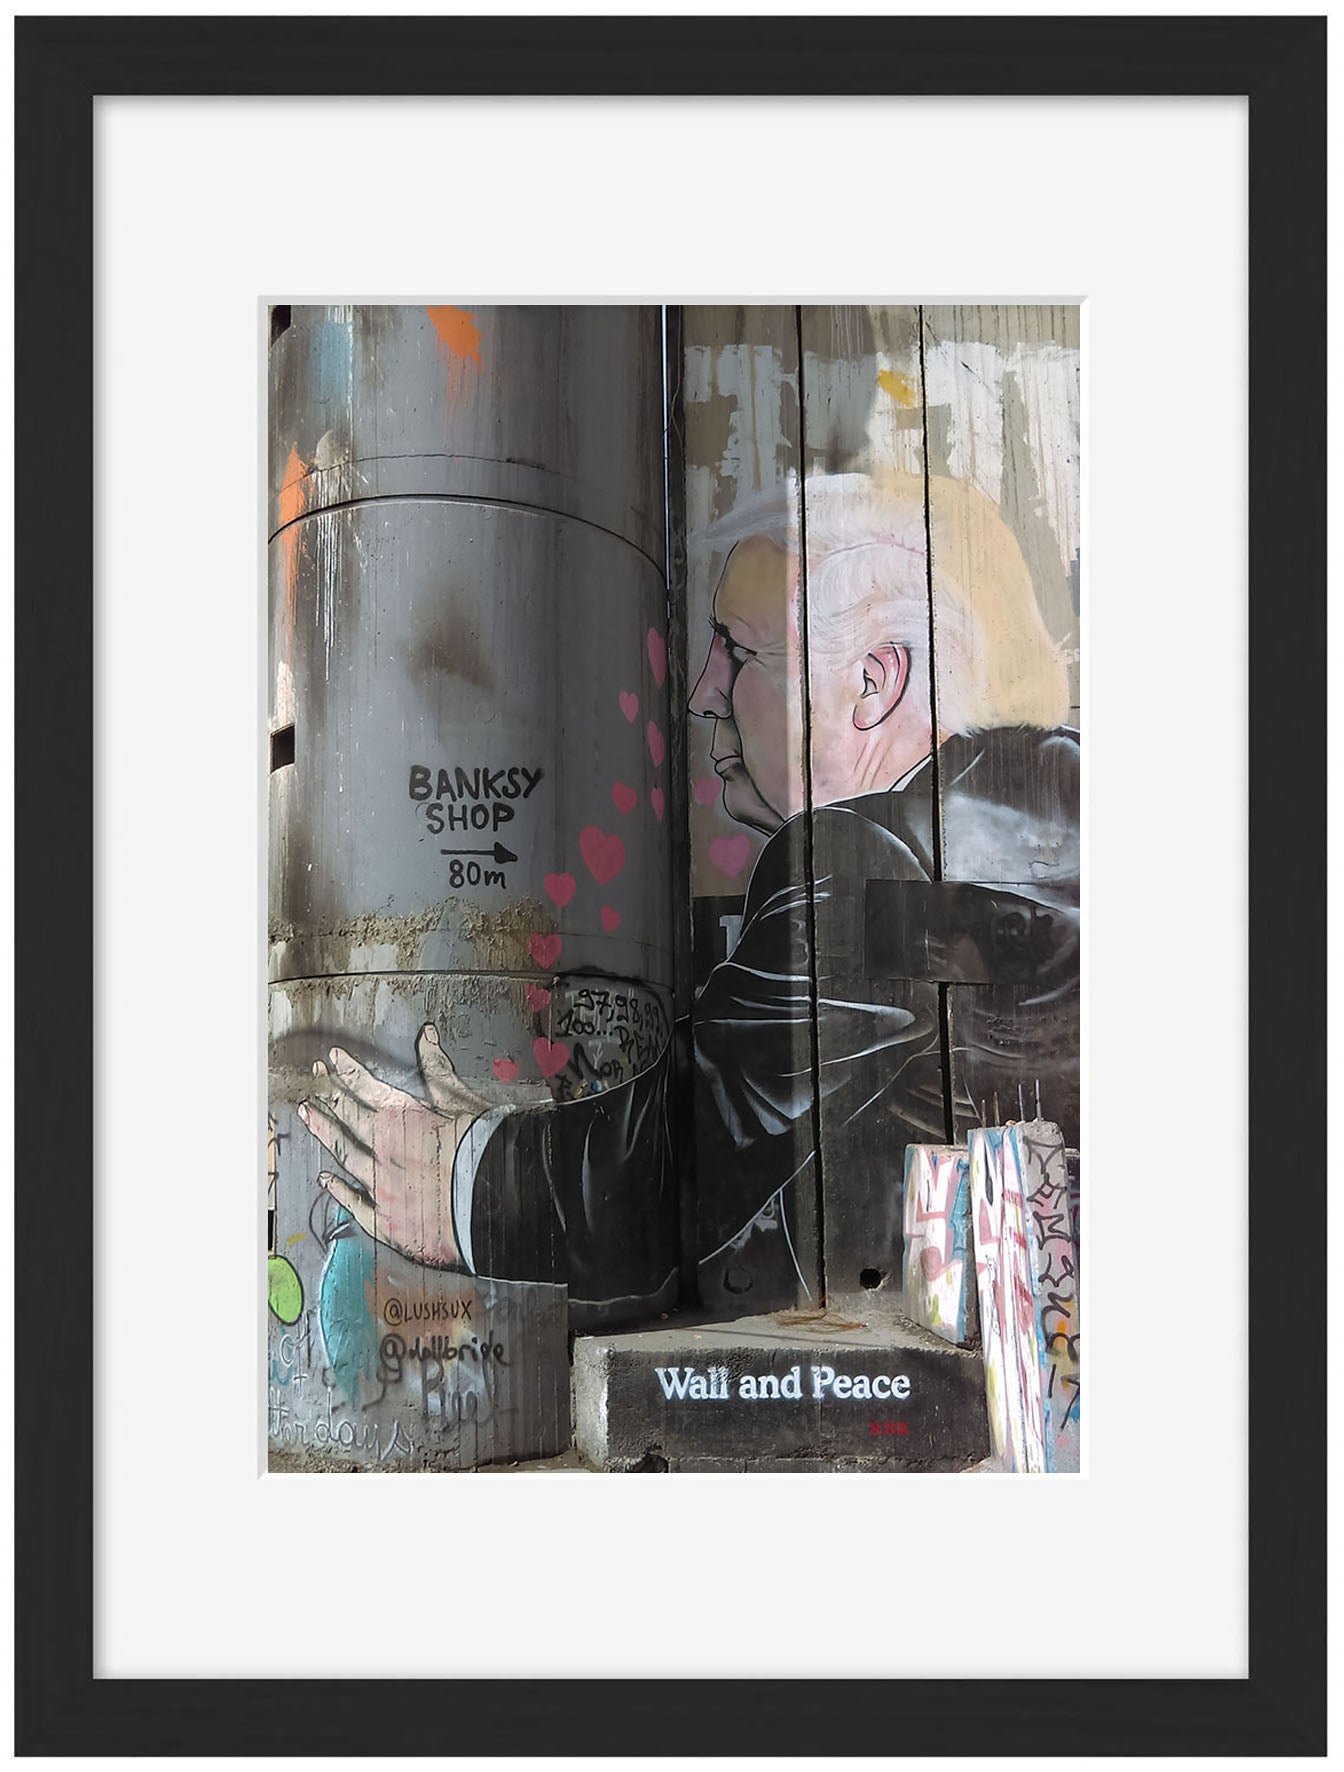 Wall and Peace-banksy, print-Framed Print-30 x 40 cm-BLUE SHAKER